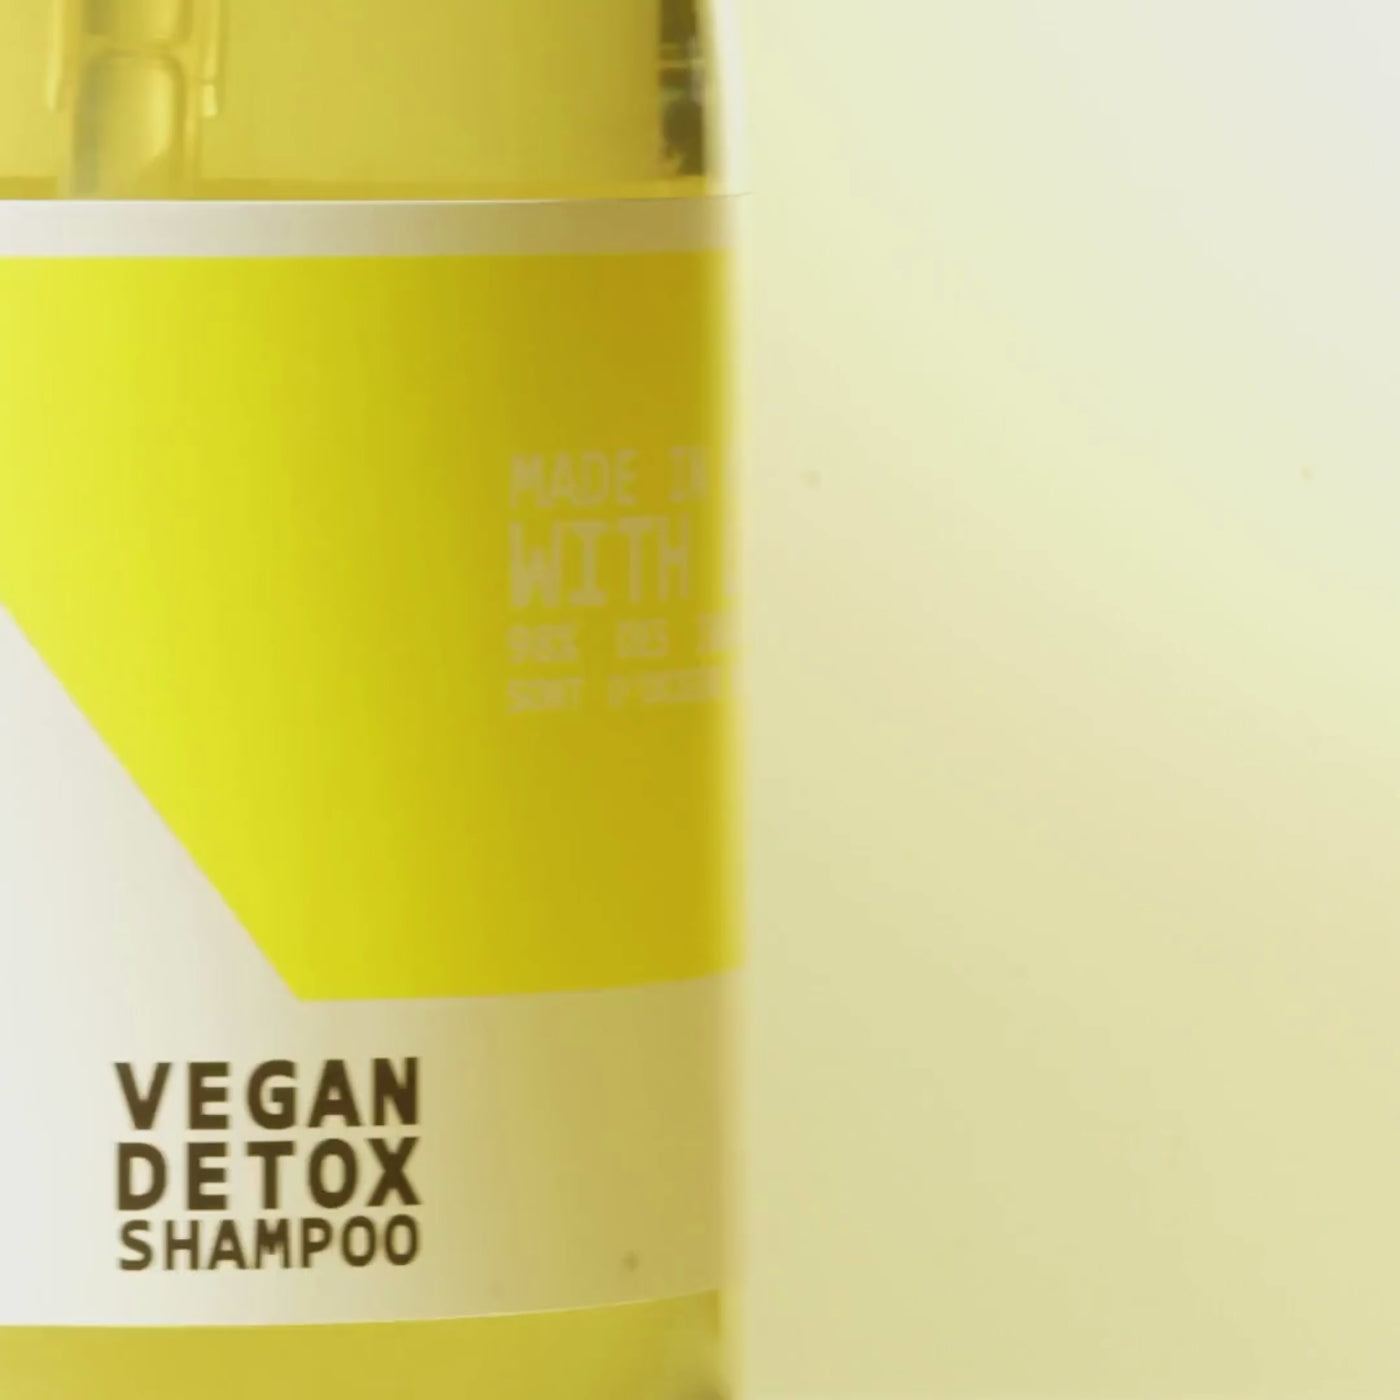 Vegan Detox Shampoo - new 290 ml size